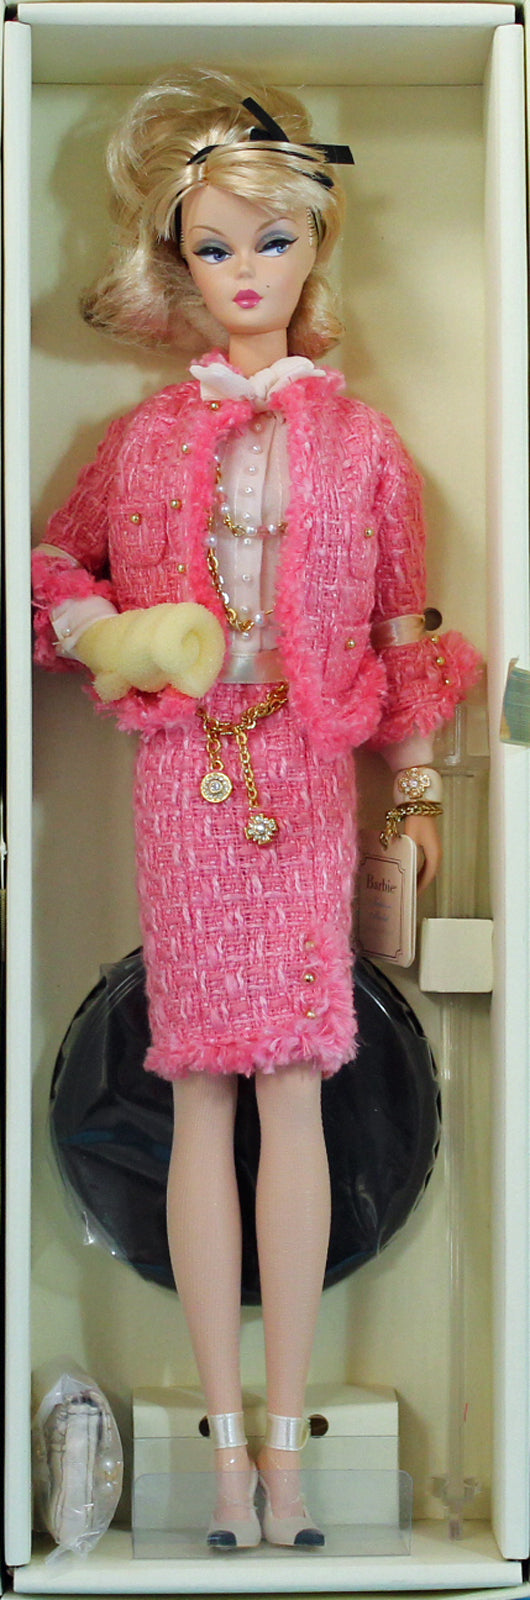 2007 Silkstone Fashion Model Preferably Pink Barbie – Sell4Value